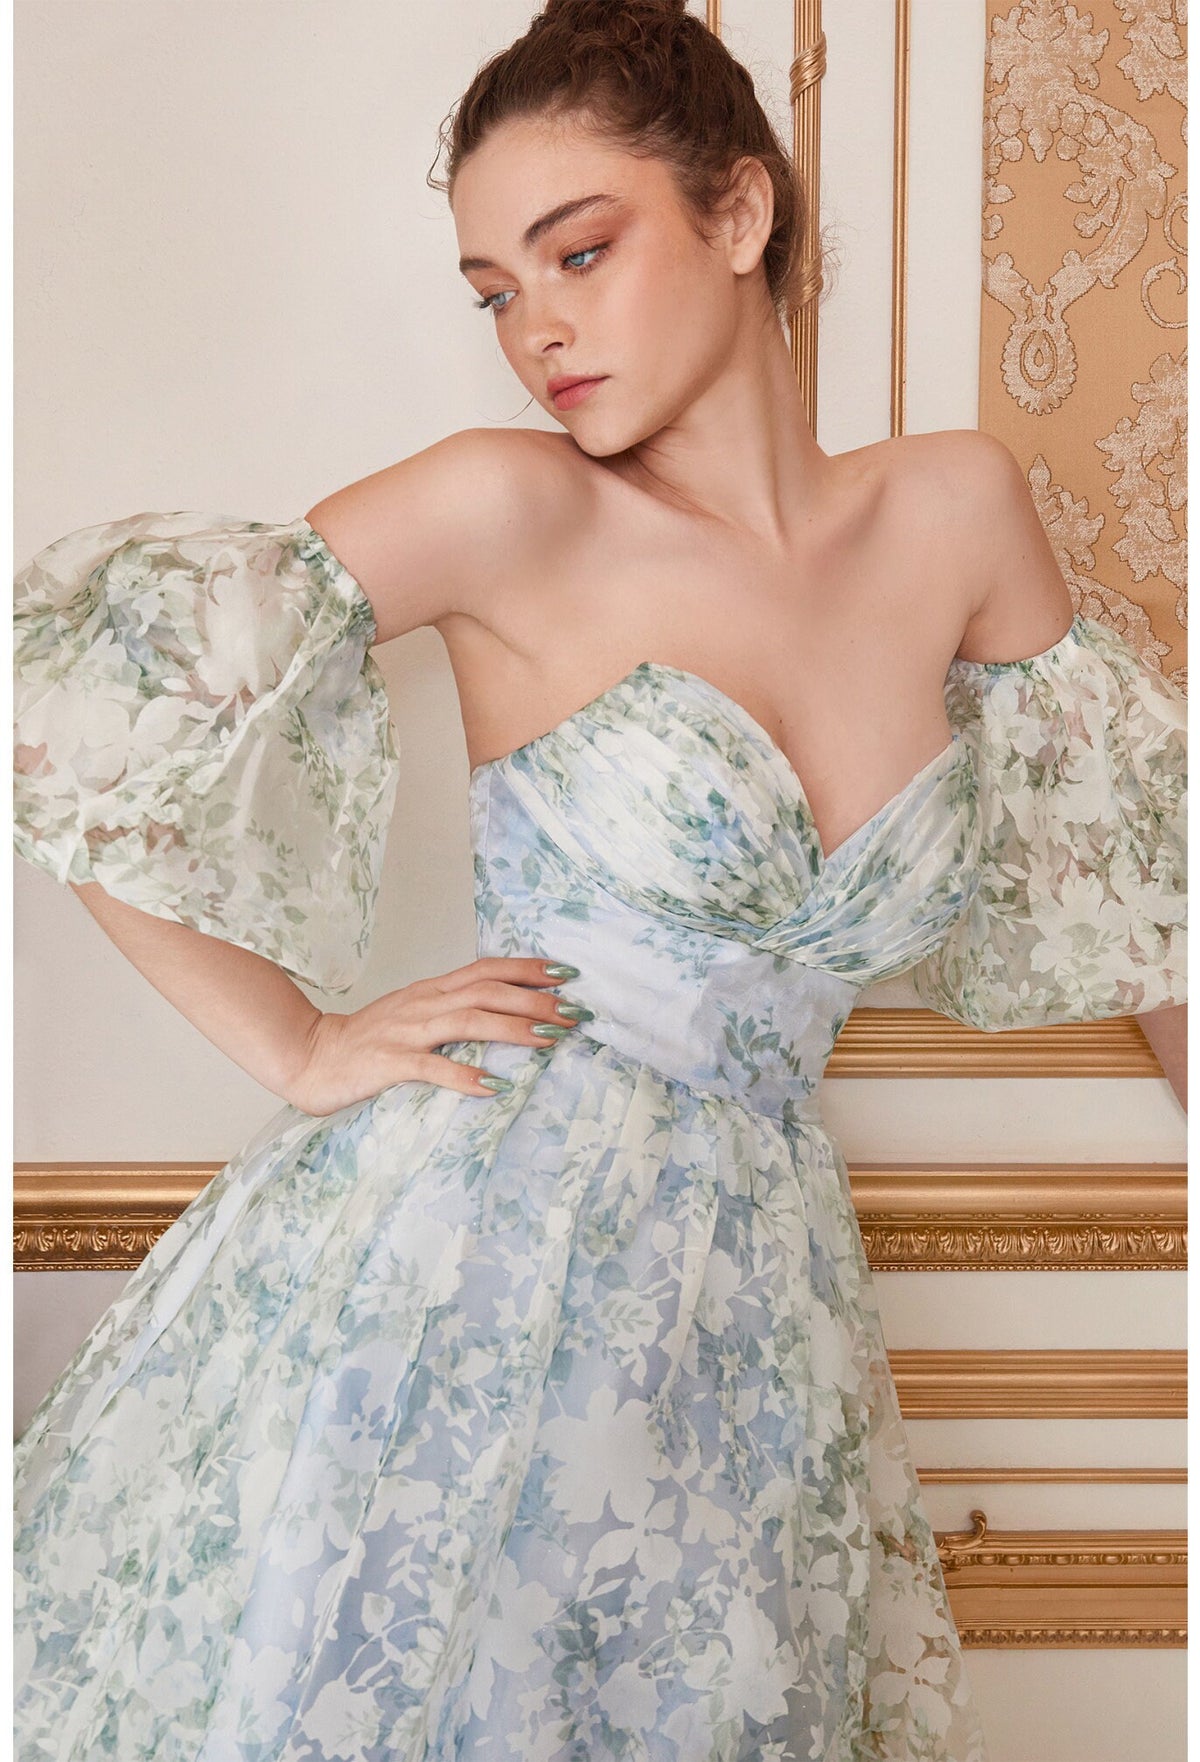 Fun Flirty Strapless Floral Tea Length Dress Sleeveless V Sweetheart Neckline Detachable Puff Sleeves Declicate Fabric Prom Reception Formal